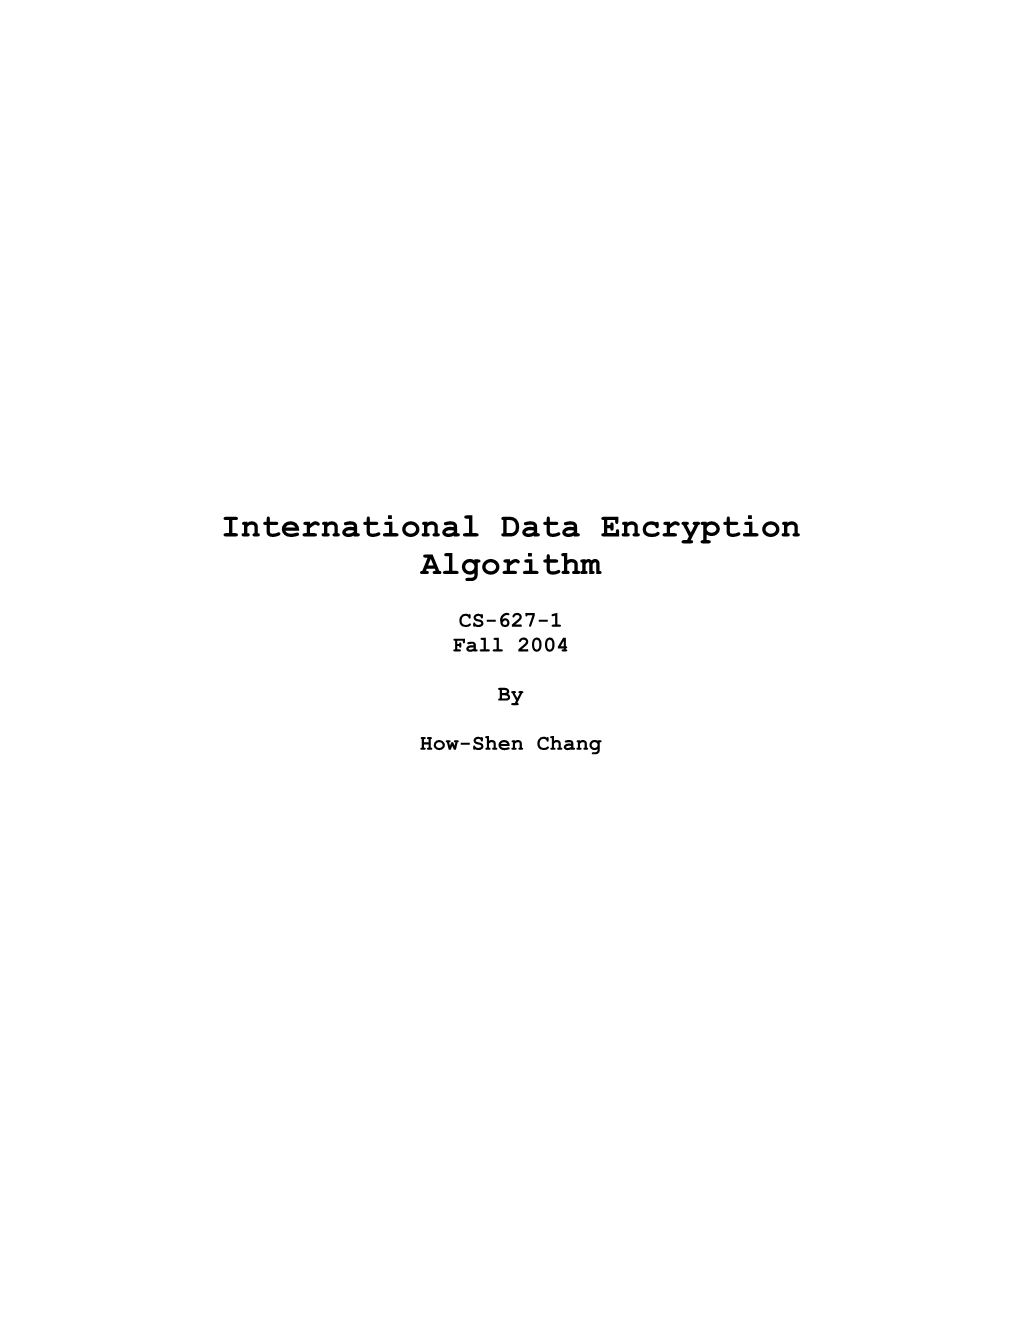 IDEA International Data Encryption Algorithm